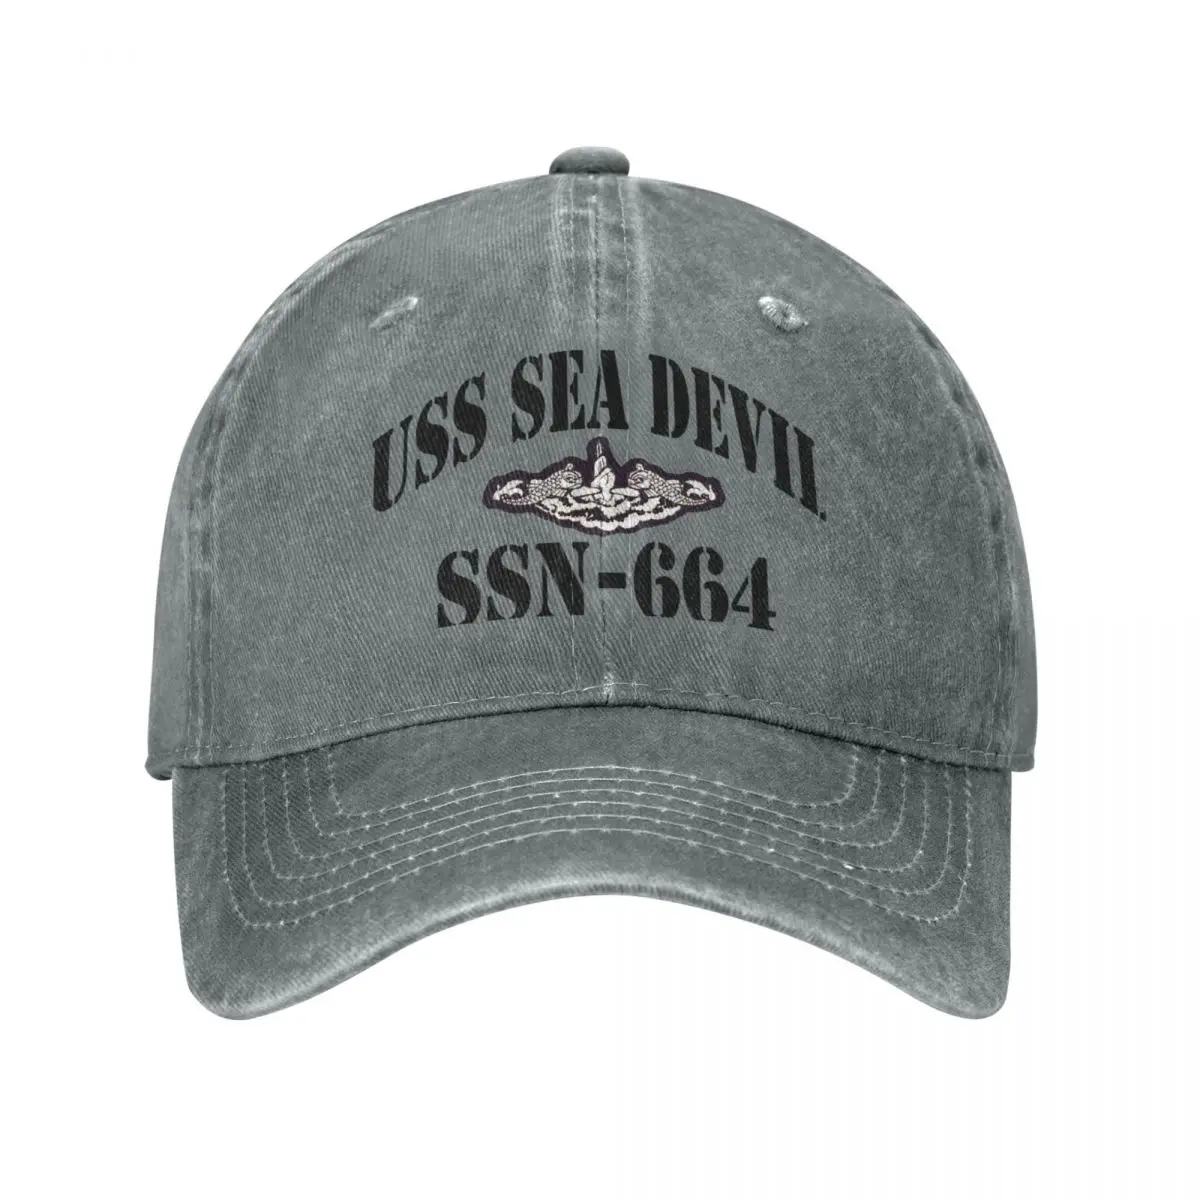 

USS SEA DEVIL (SSN-664) SHIP'S STORE Cowboy Hat Military Tactical Cap foam party hats Luxury Cap summer hats Hats Man Women'S